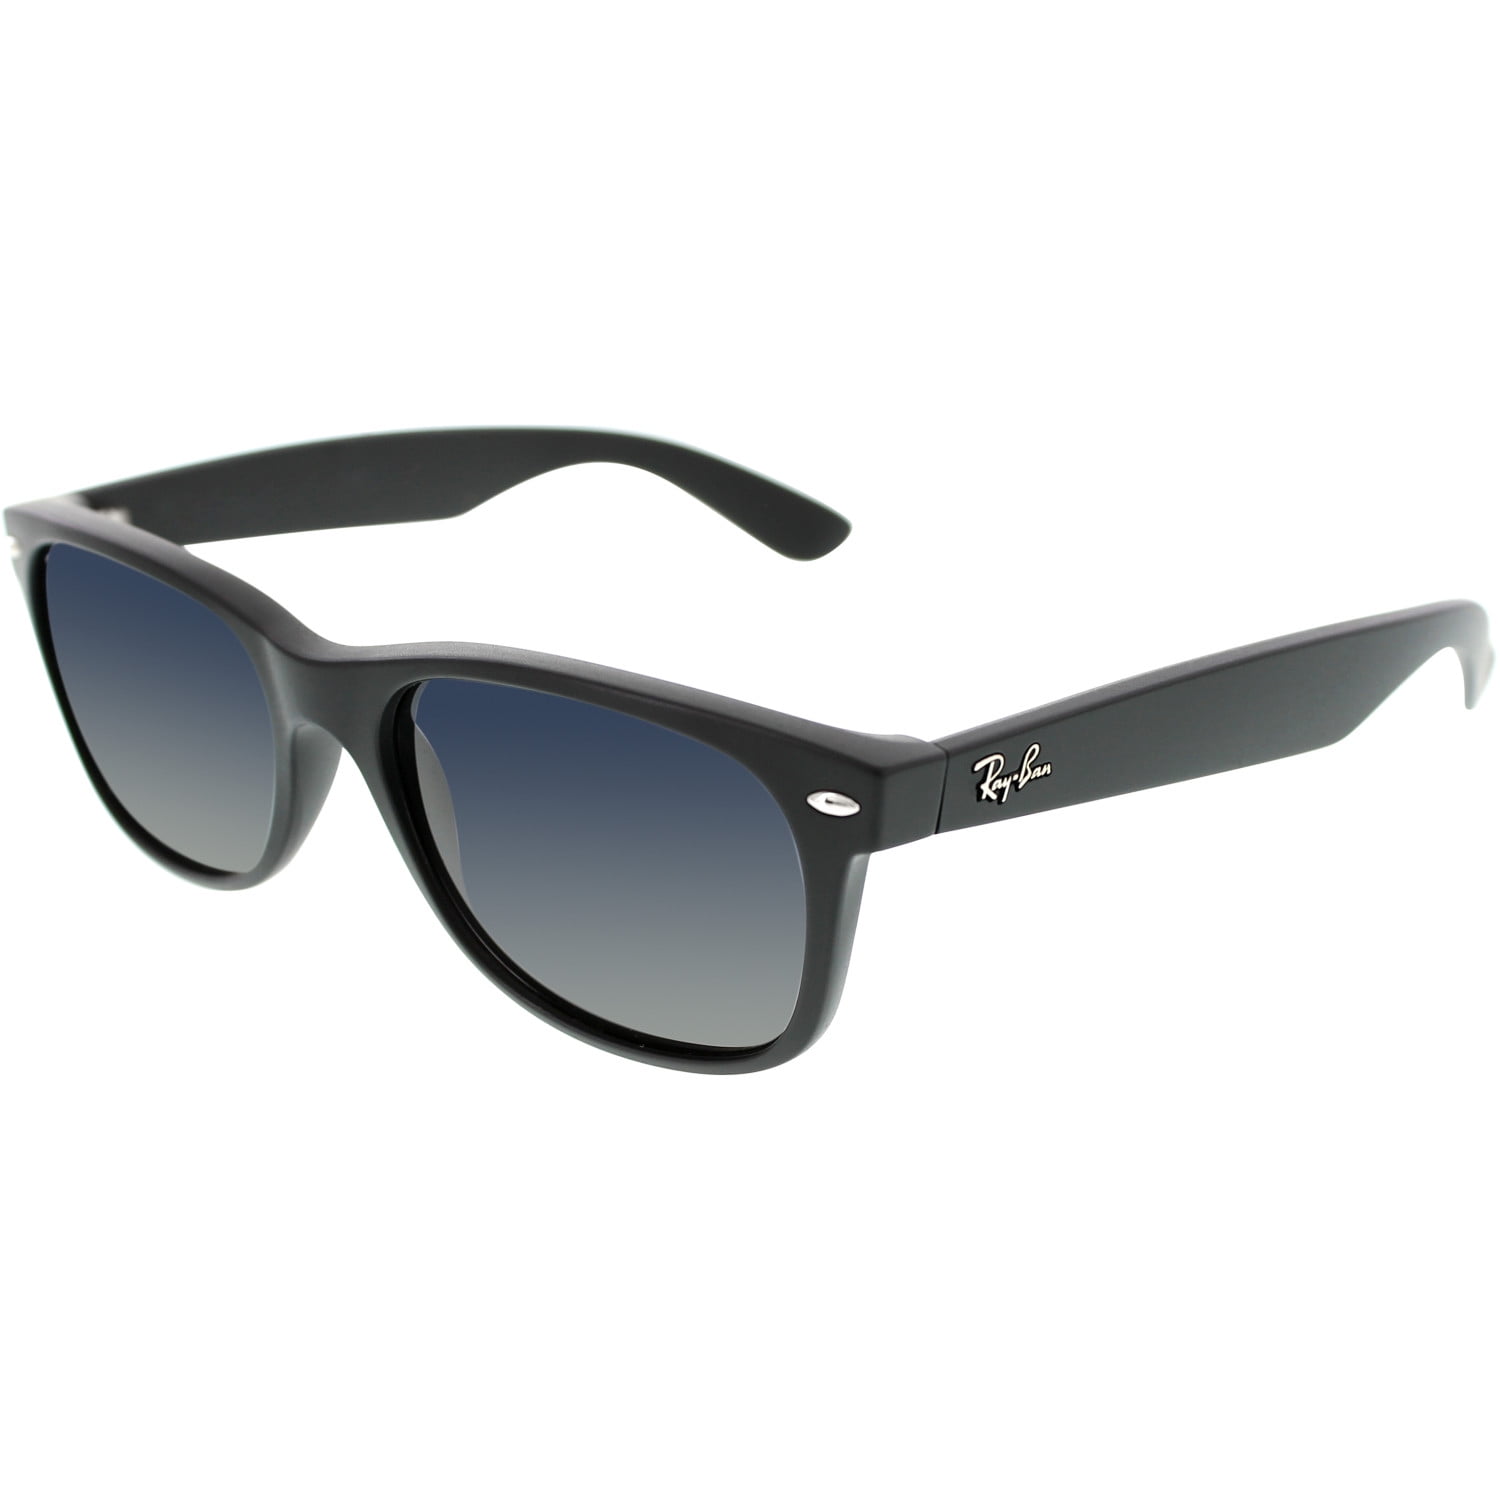 Ray-Ban Men's New Wayfarer Sunglasses -